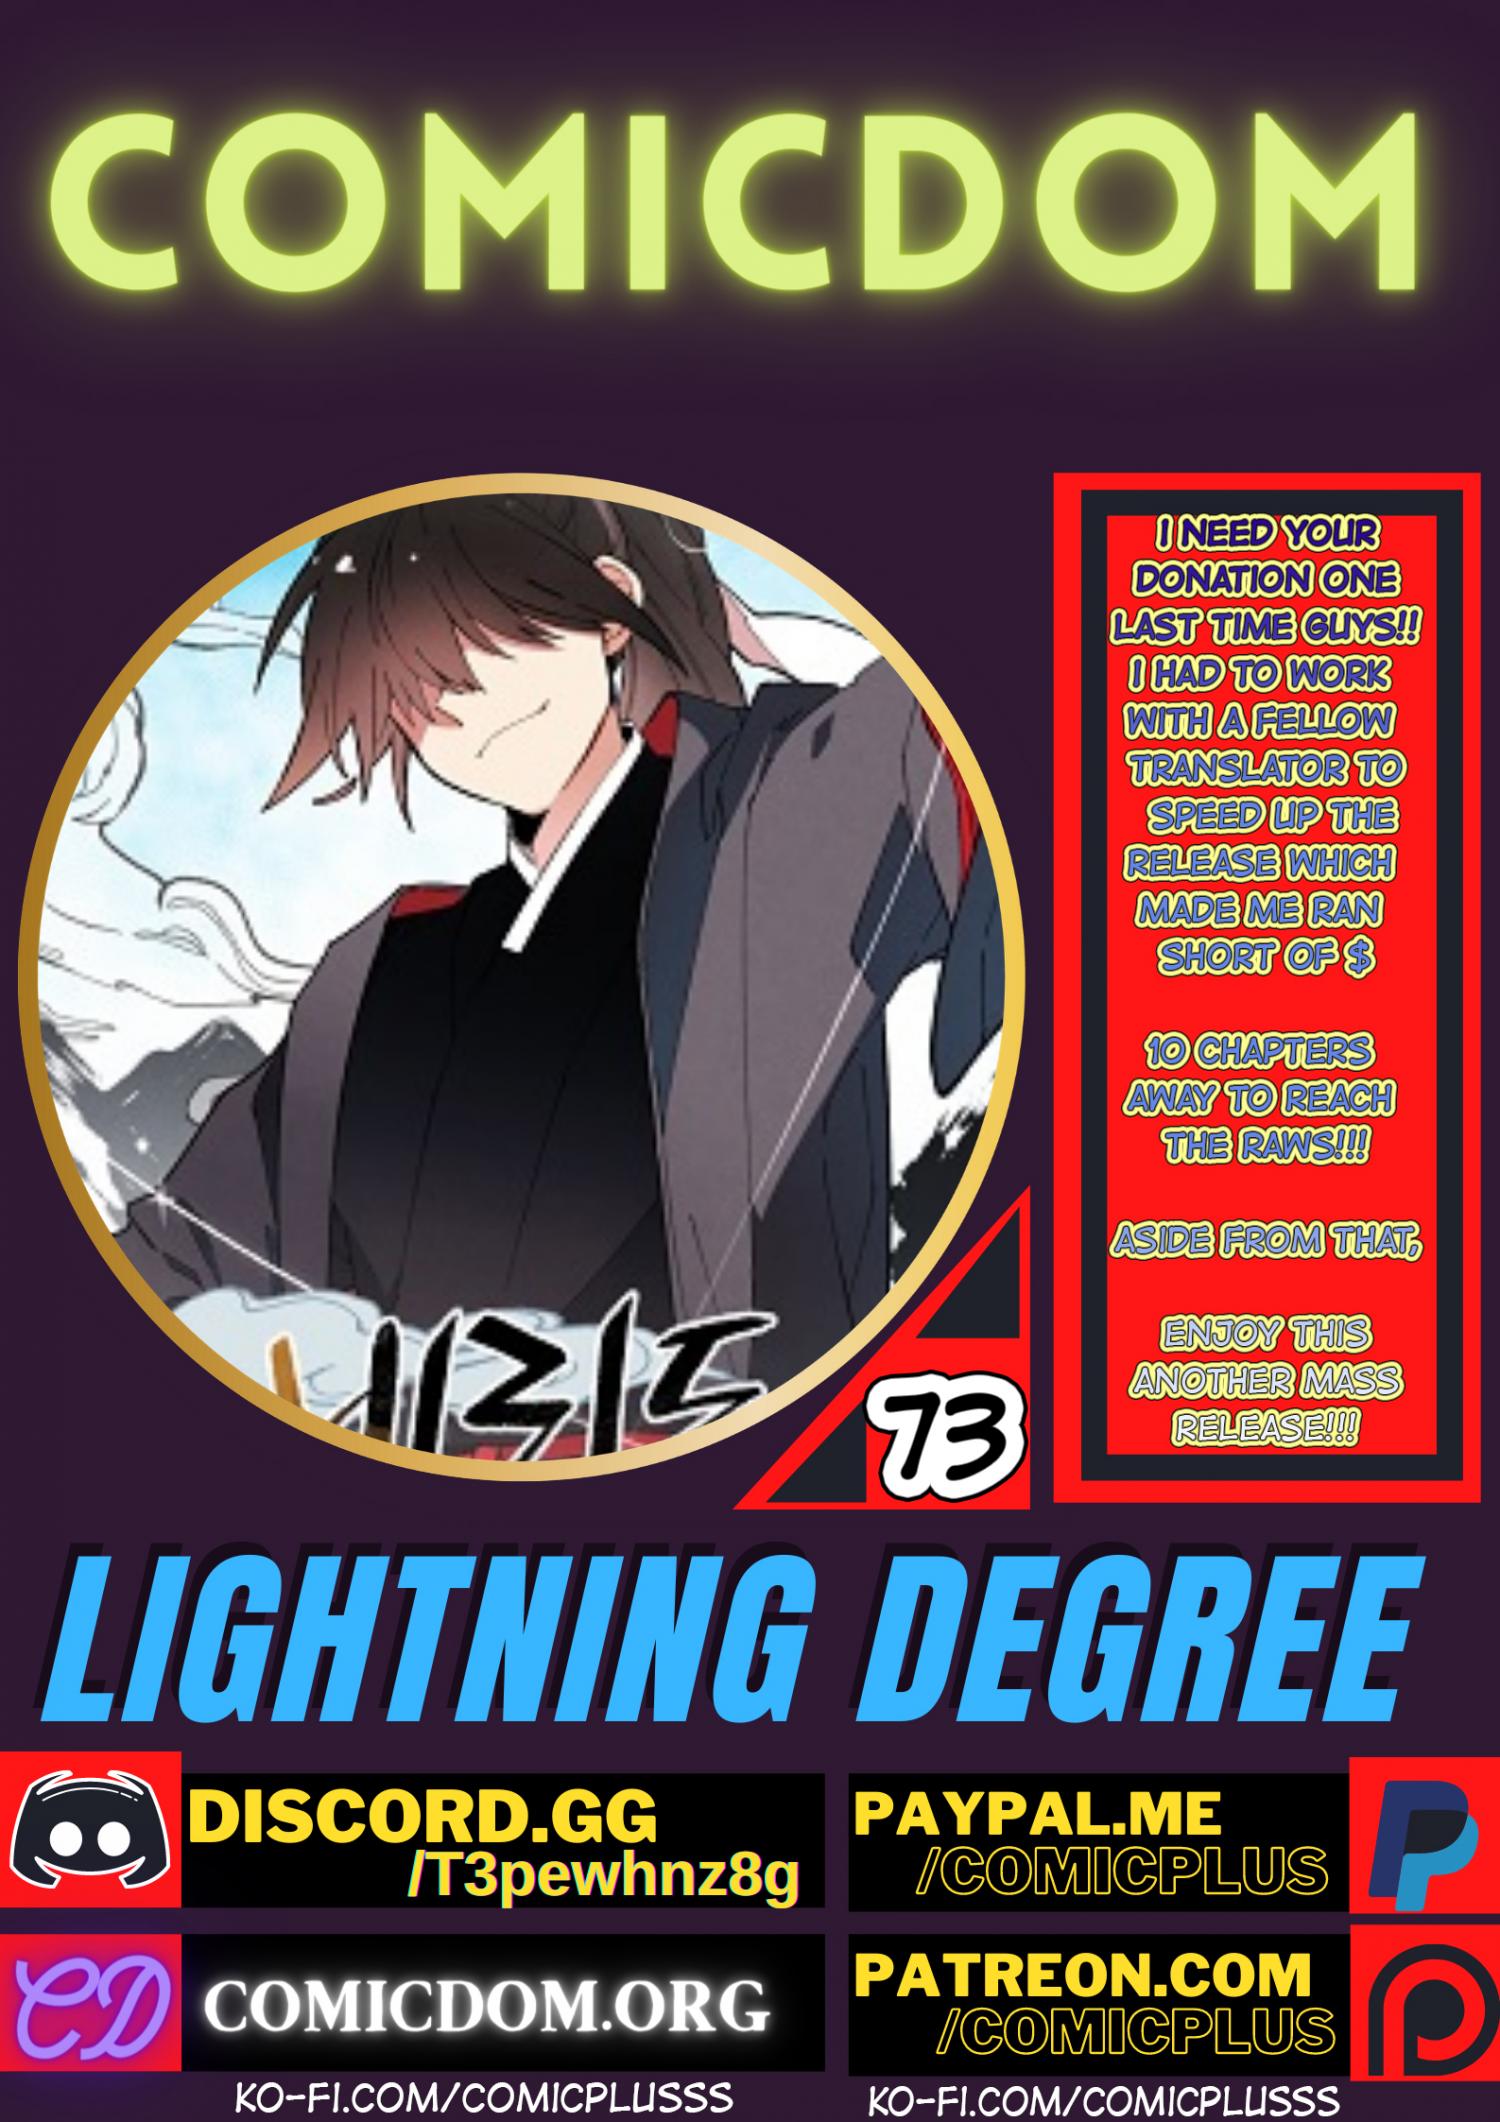 Lightning Degree, Lightning Degree manga, Lightning Degree manhwa, Lightning Degree anime, read Lightning Degree